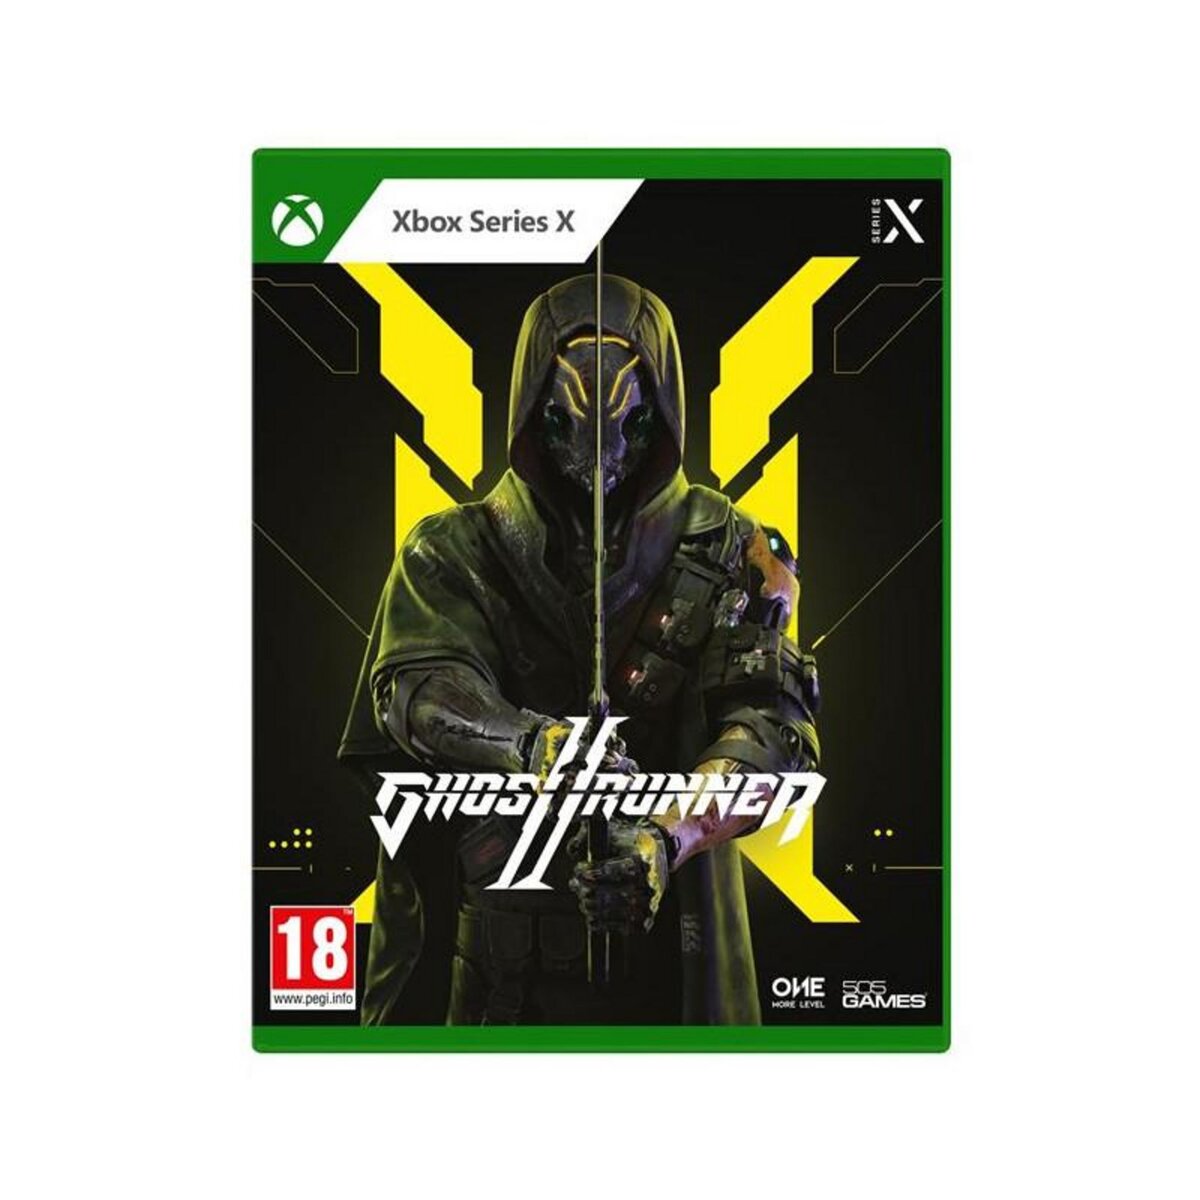 PREMIUM Ghostrunner 2 Xbox Series X